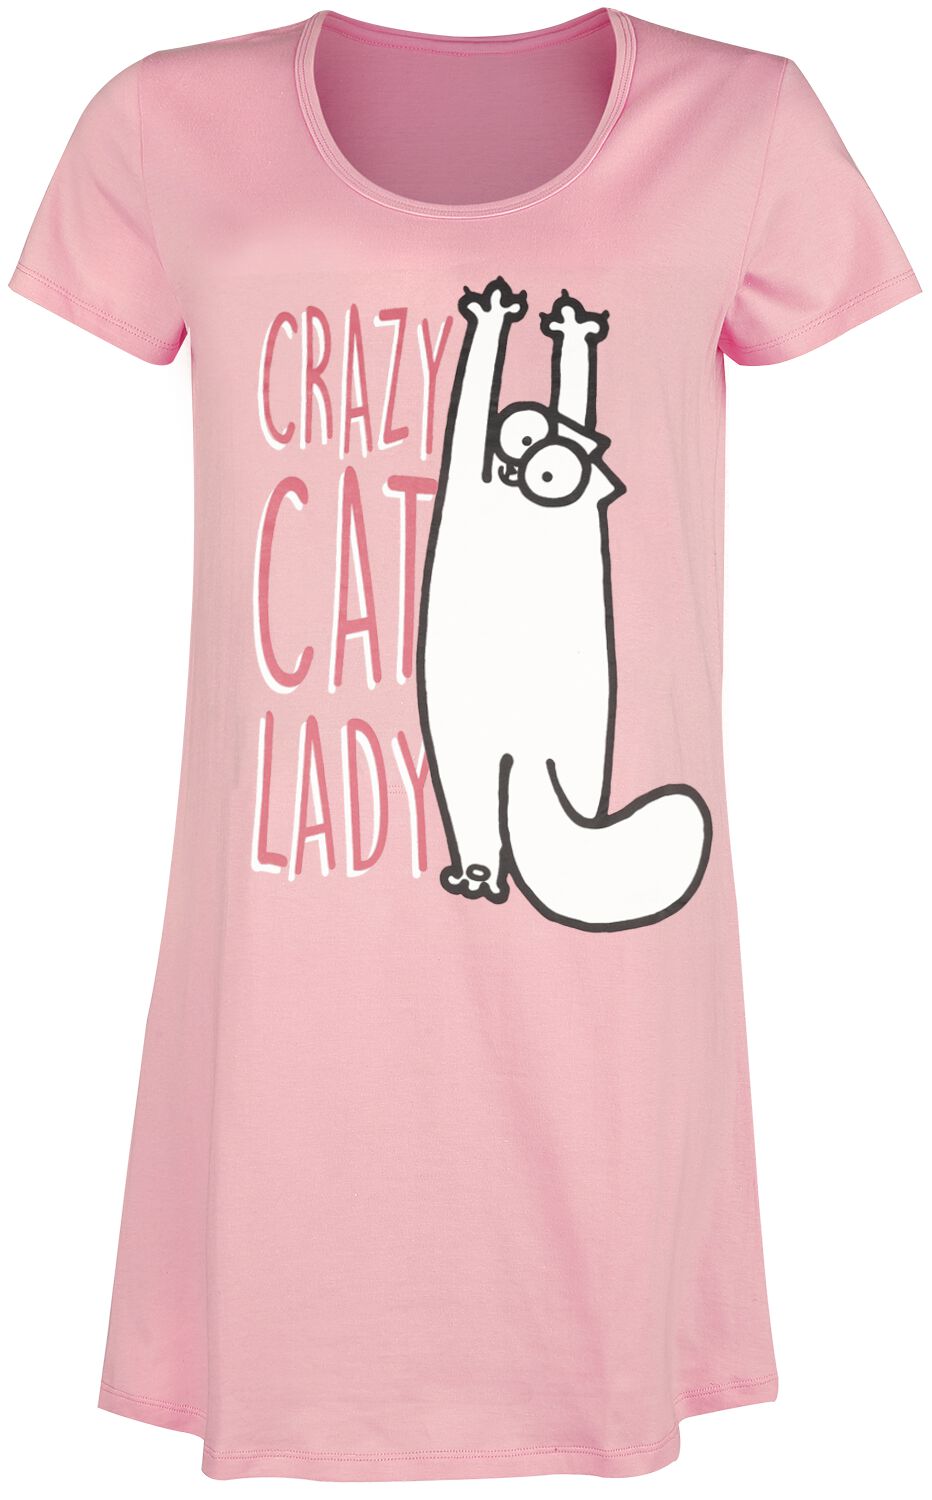 Simon' s Cat Crazy Cat Lady Nightshirt light pink